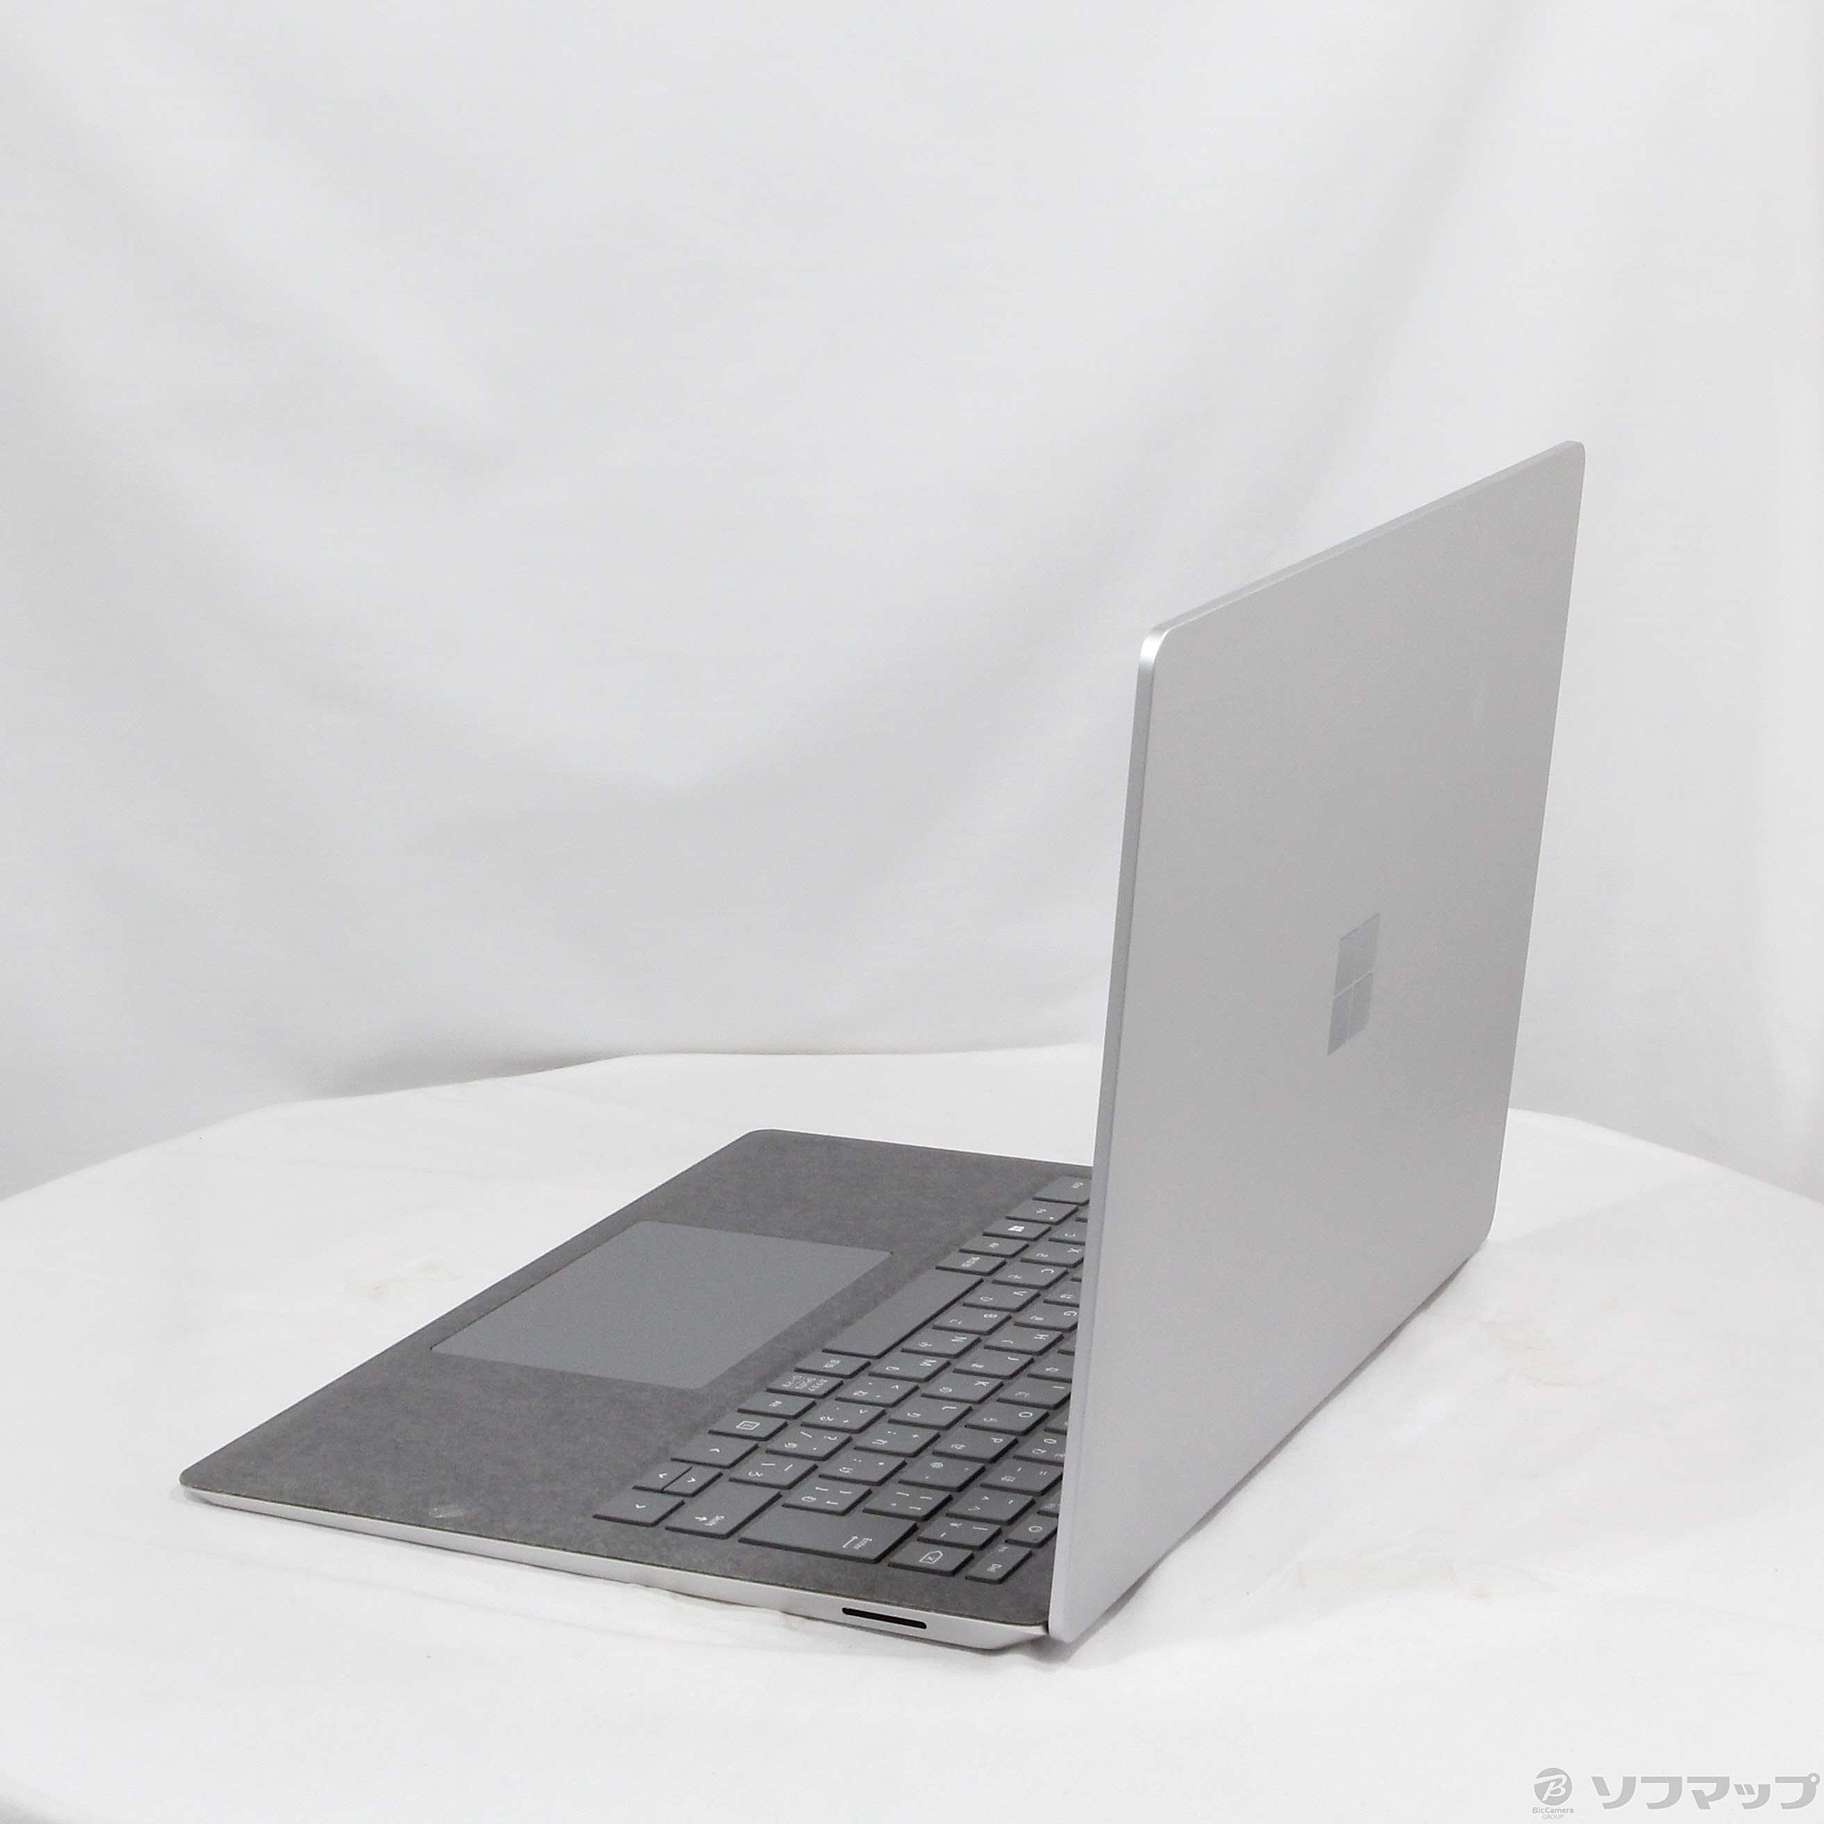 中古】Surface Laptop 3 〔Core i5／8GB／SSD128GB〕 VGY-00018 ...